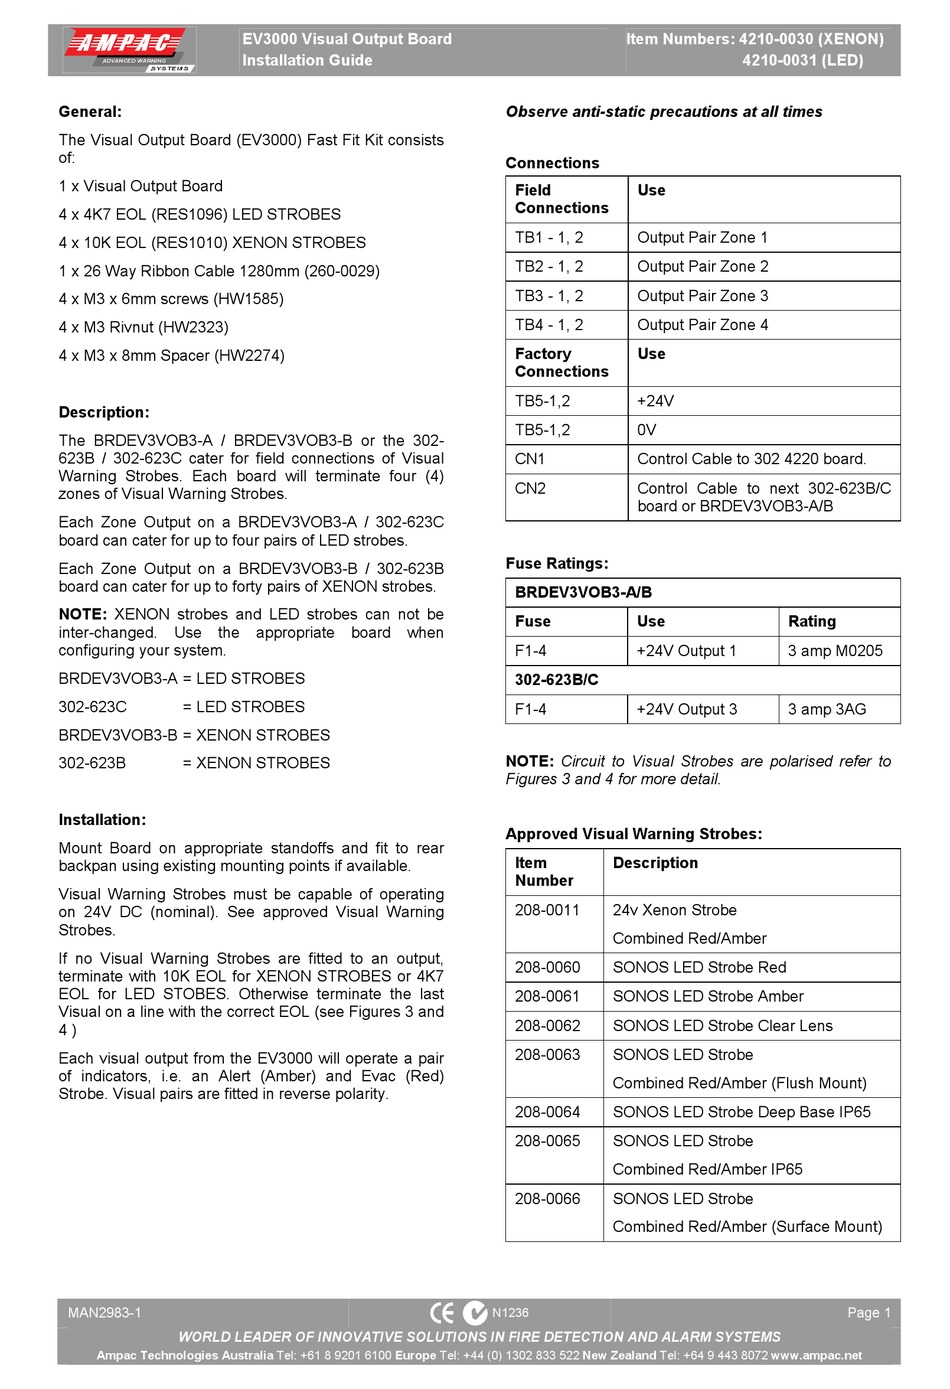 Download Ampac Spa Controller Manual free